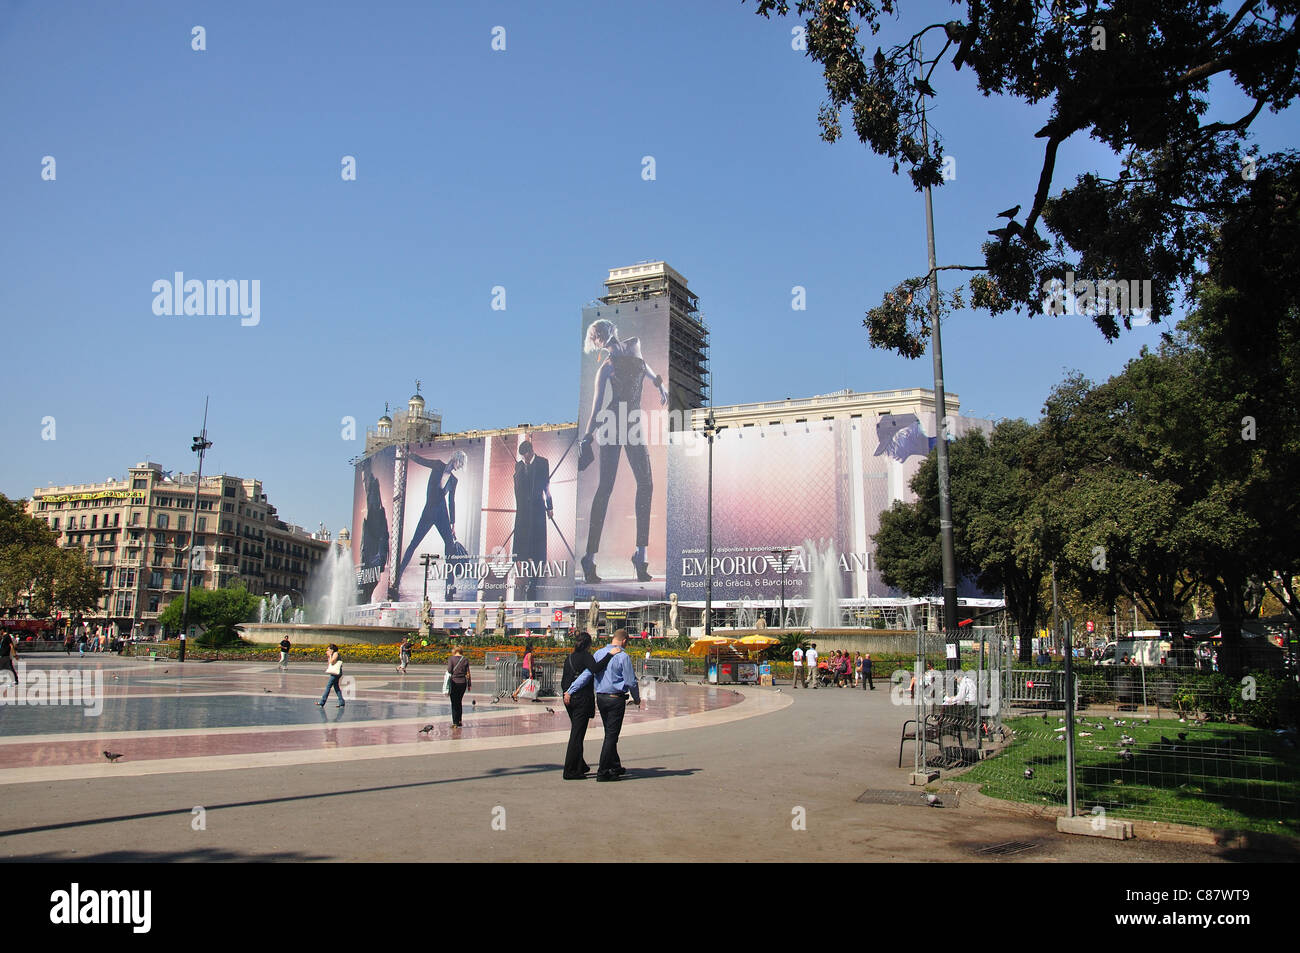 Advertising hoarding covering scaffolding, Plaça Catalunya, Barcelona, Province of Barcelona, Catalonia, Spain Stock Photo